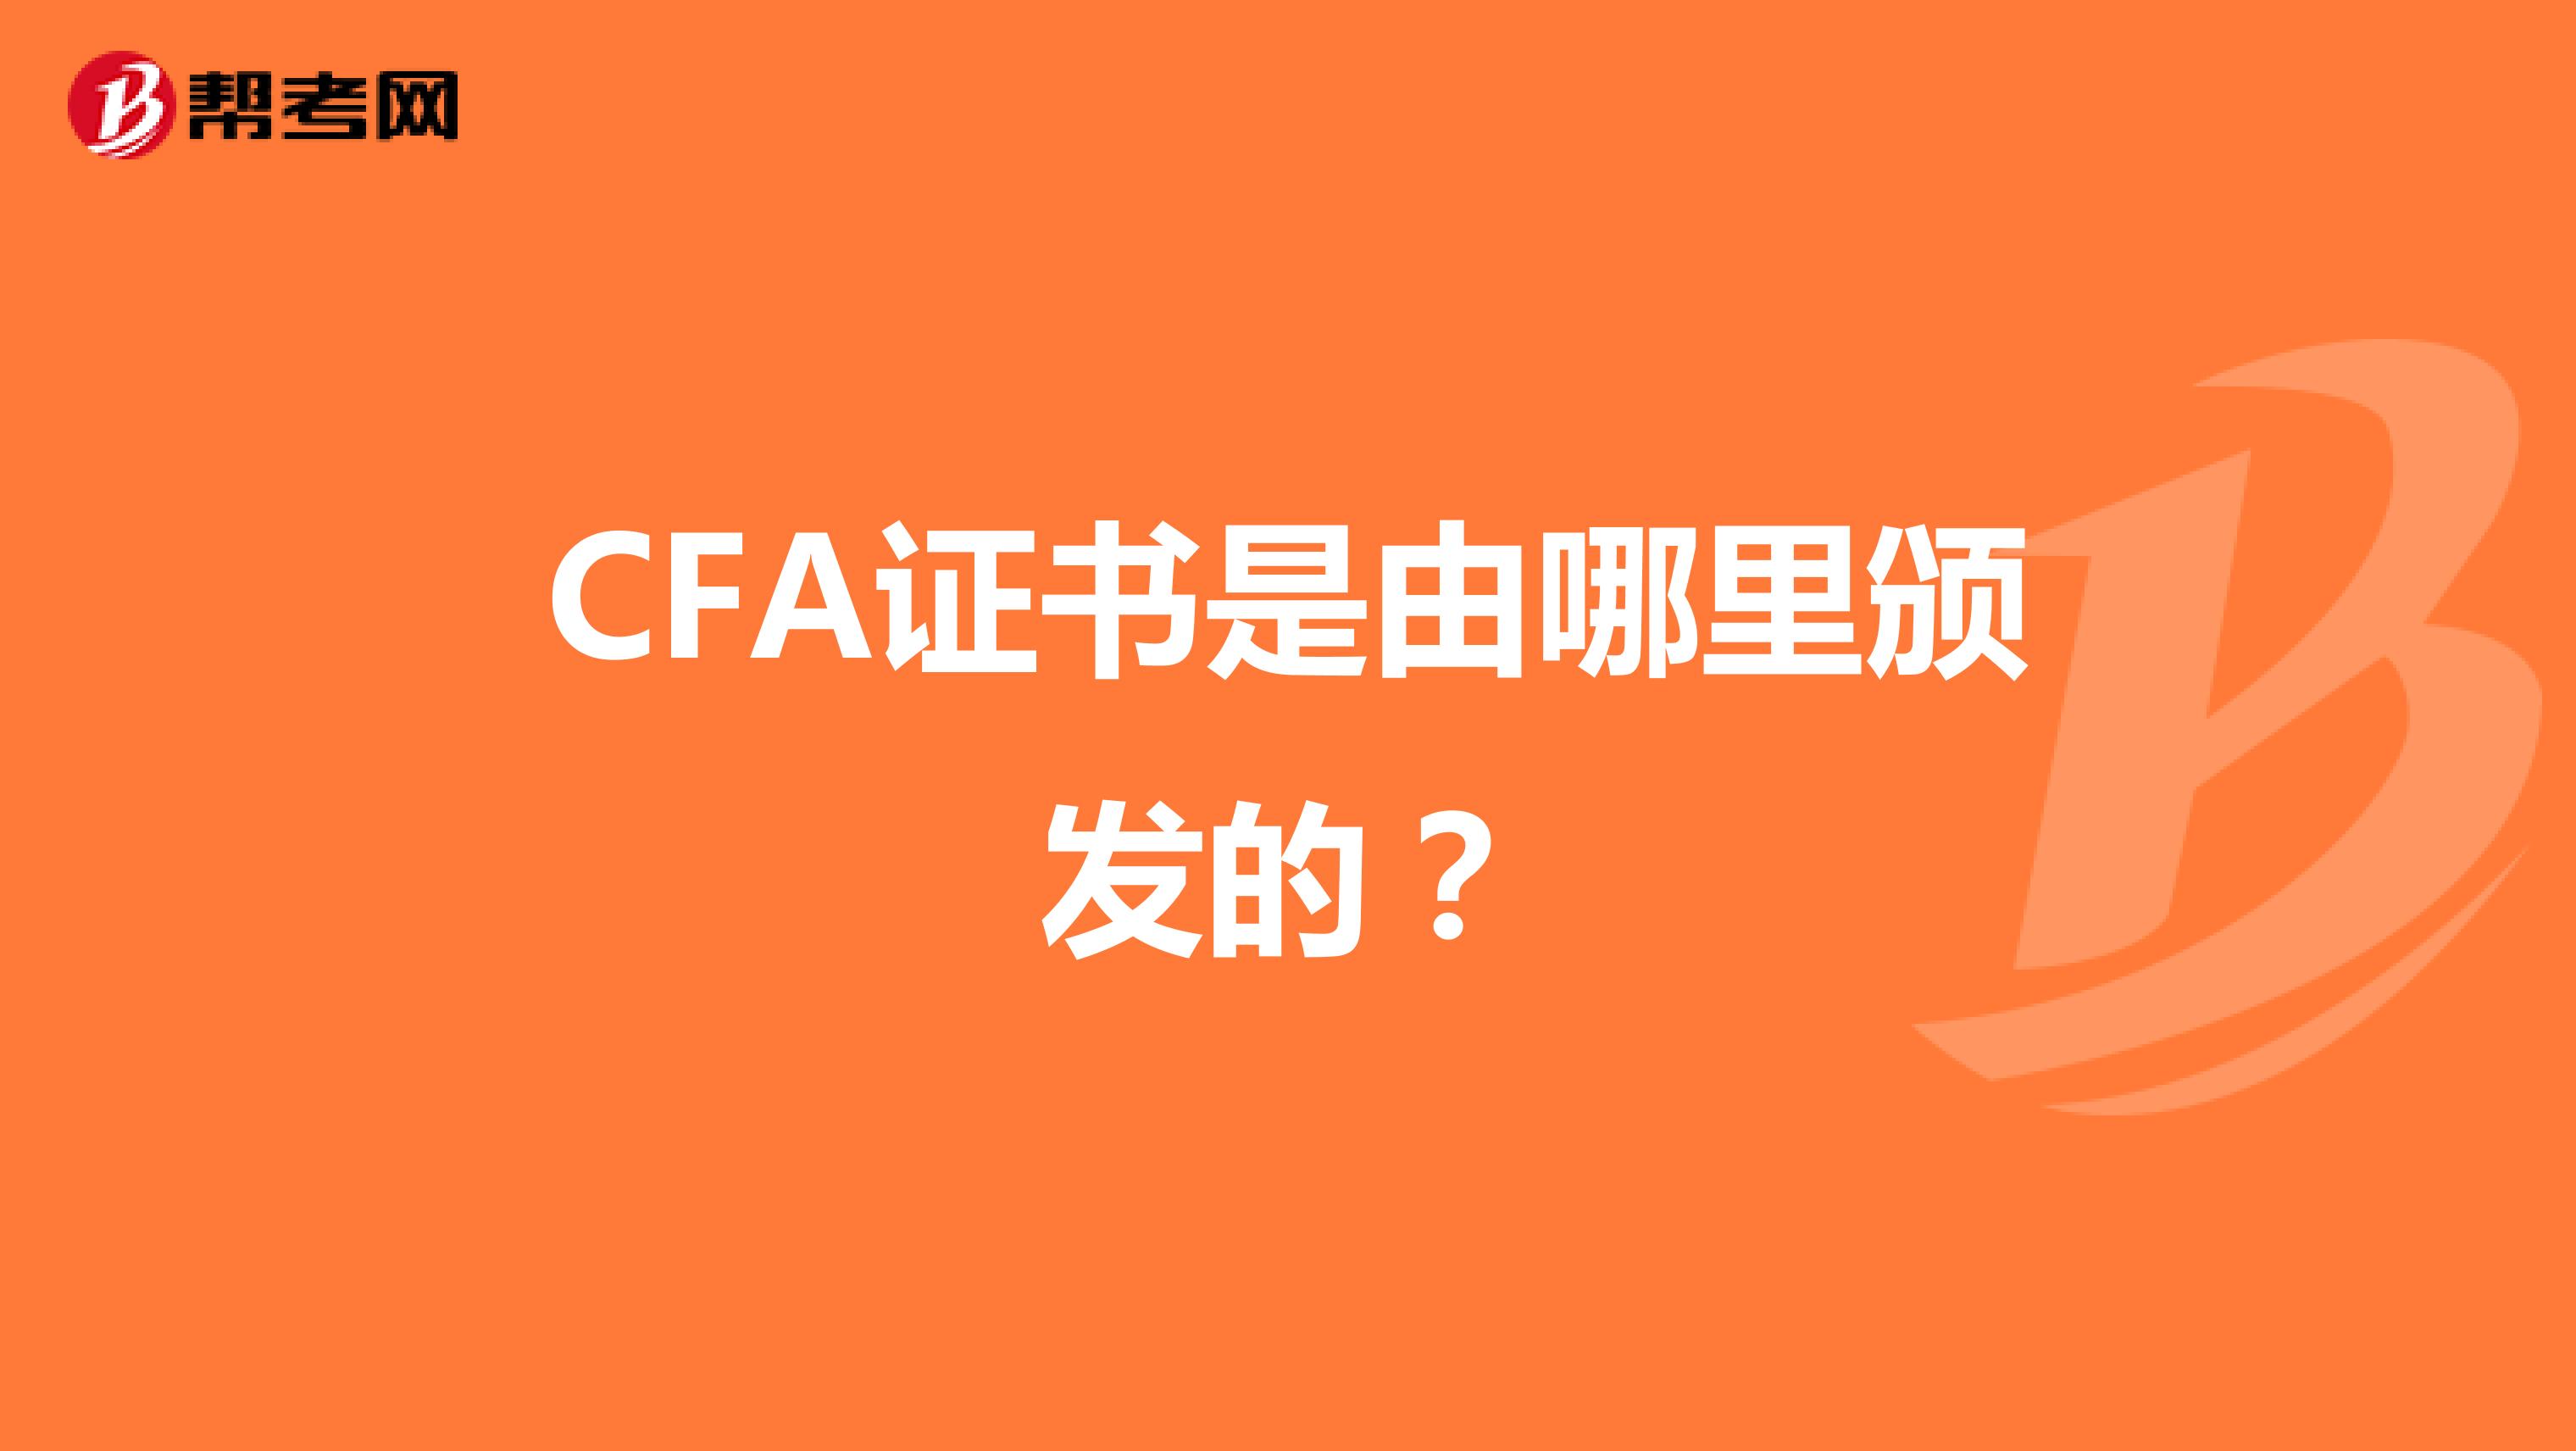 CFA证书是由哪里颁发的？